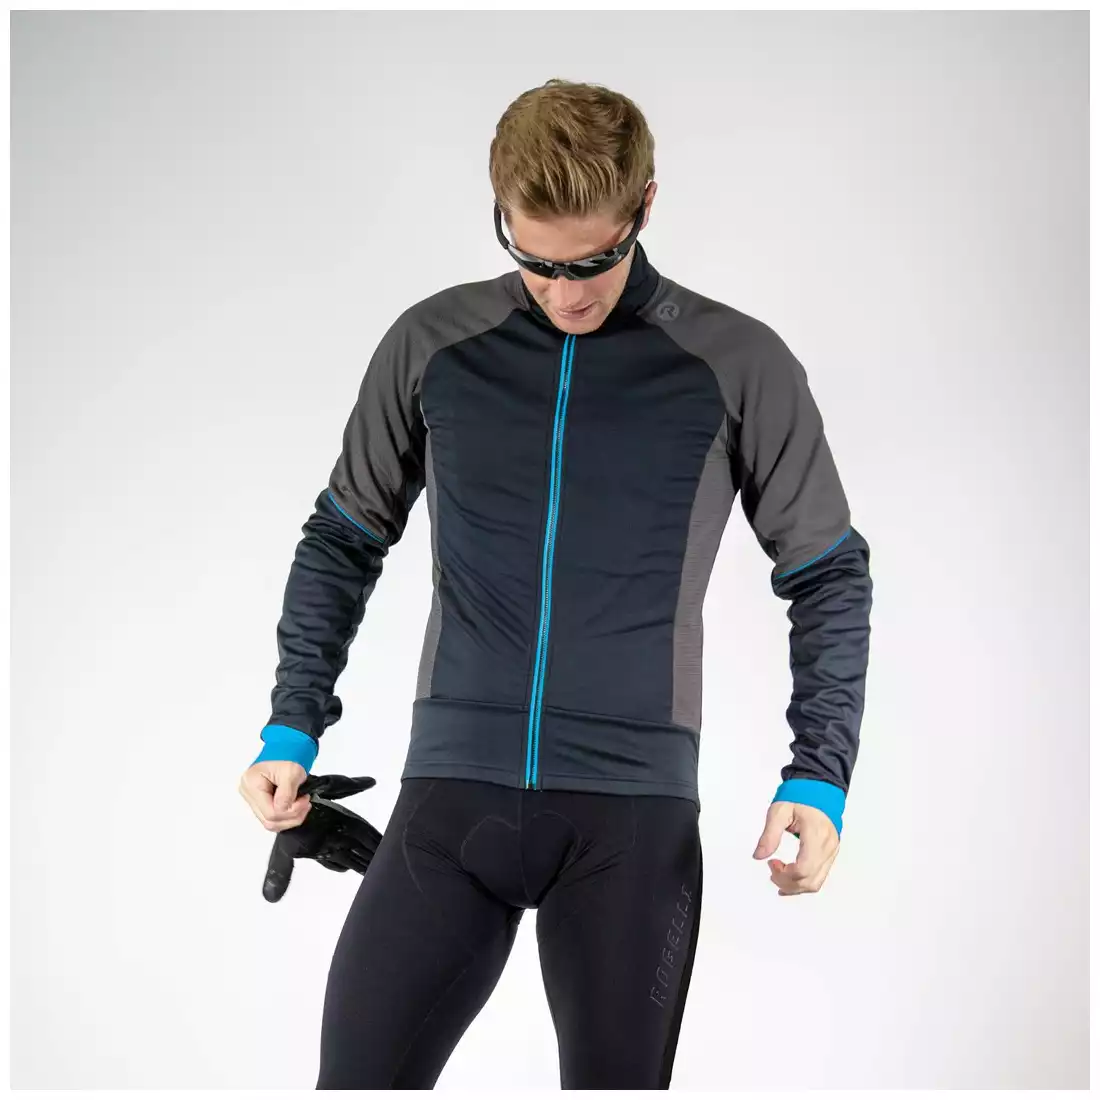 ROGELLI winter cycling jacket TRANI 4.0 softshell, black-gray-blue